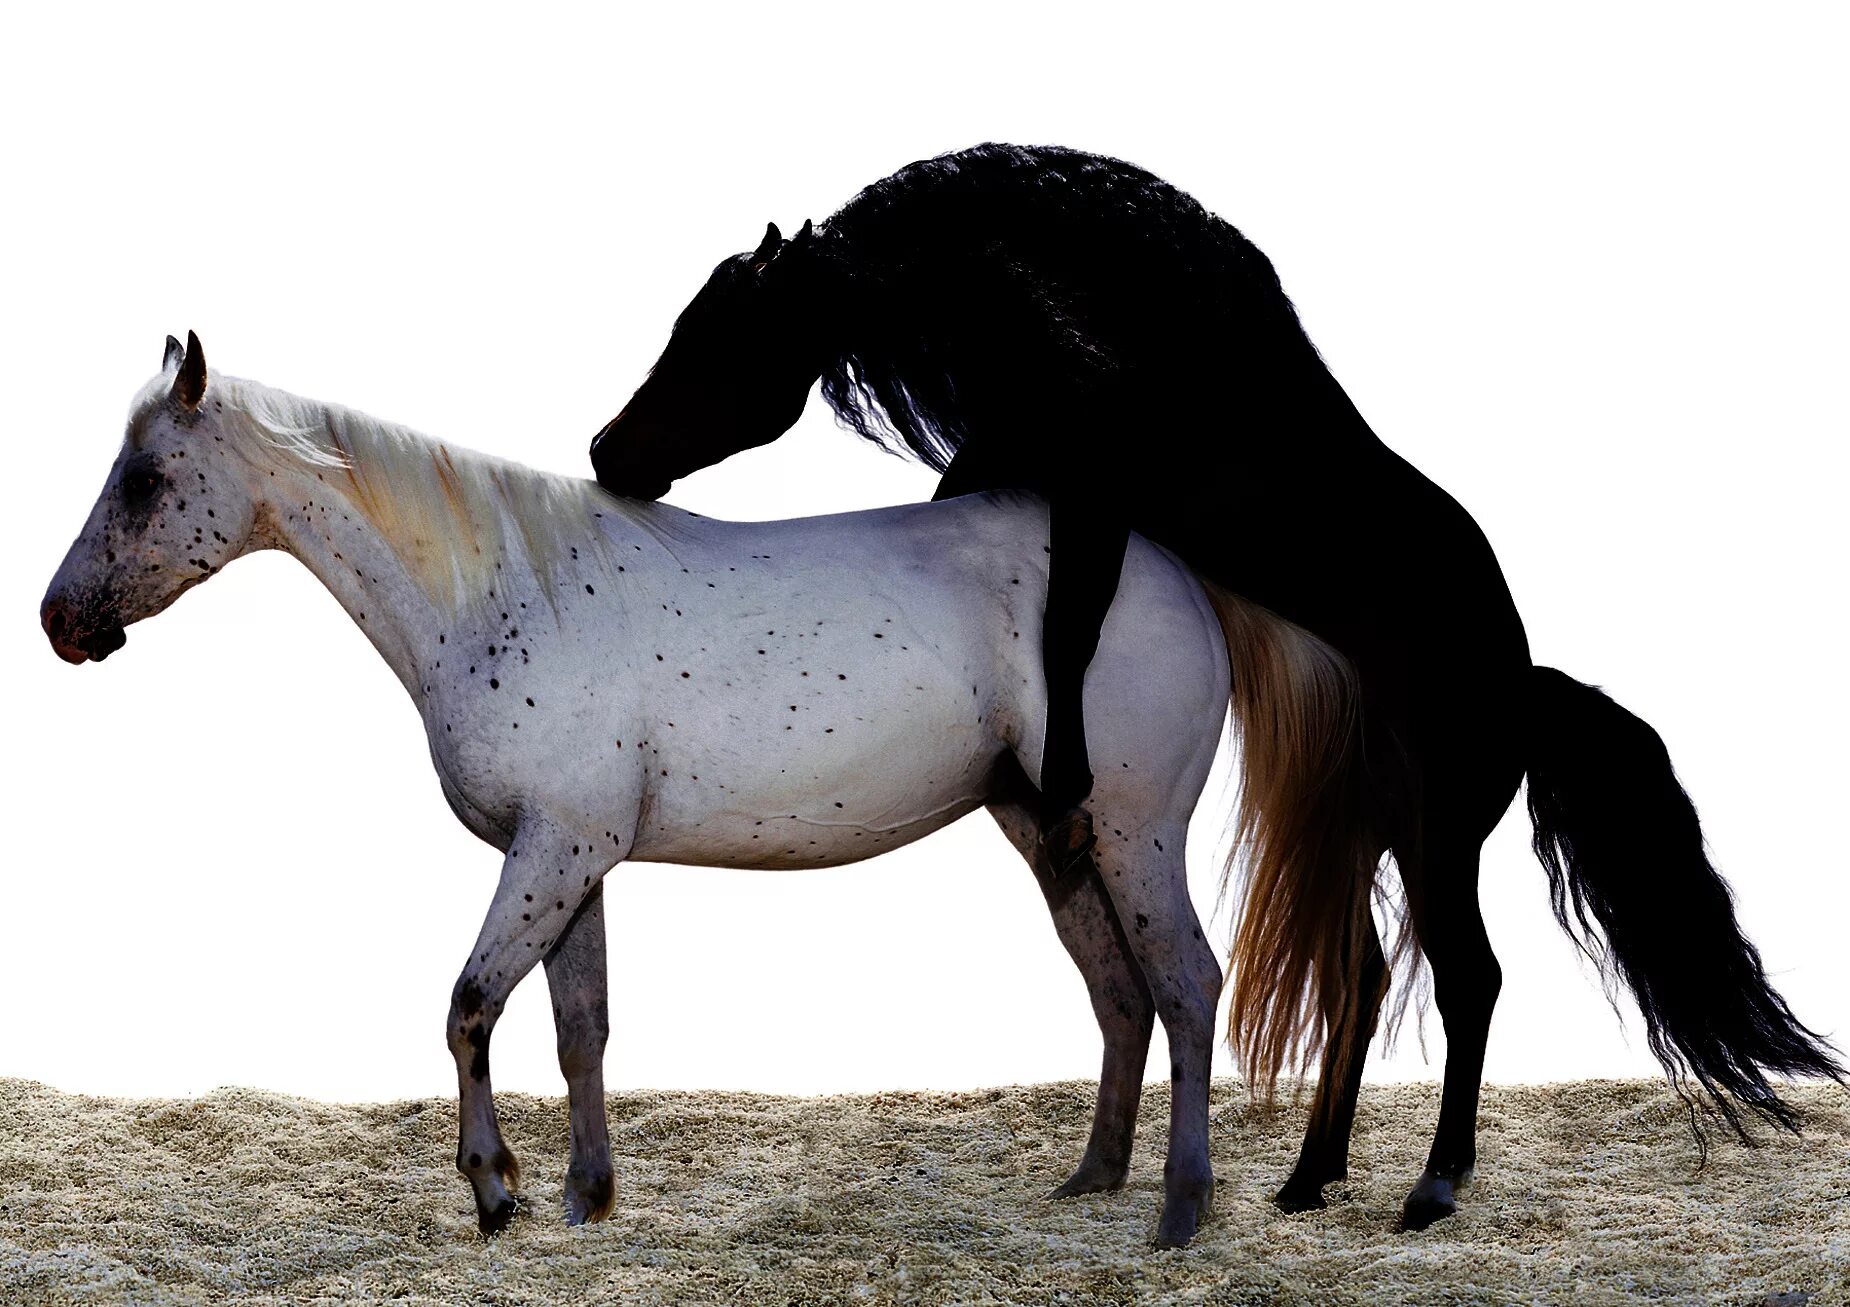 Реклама лошадок. Оливьеро Тоскани лошади. Спаривание лошадей. Лошади спариваются. Лошадь кобыла.